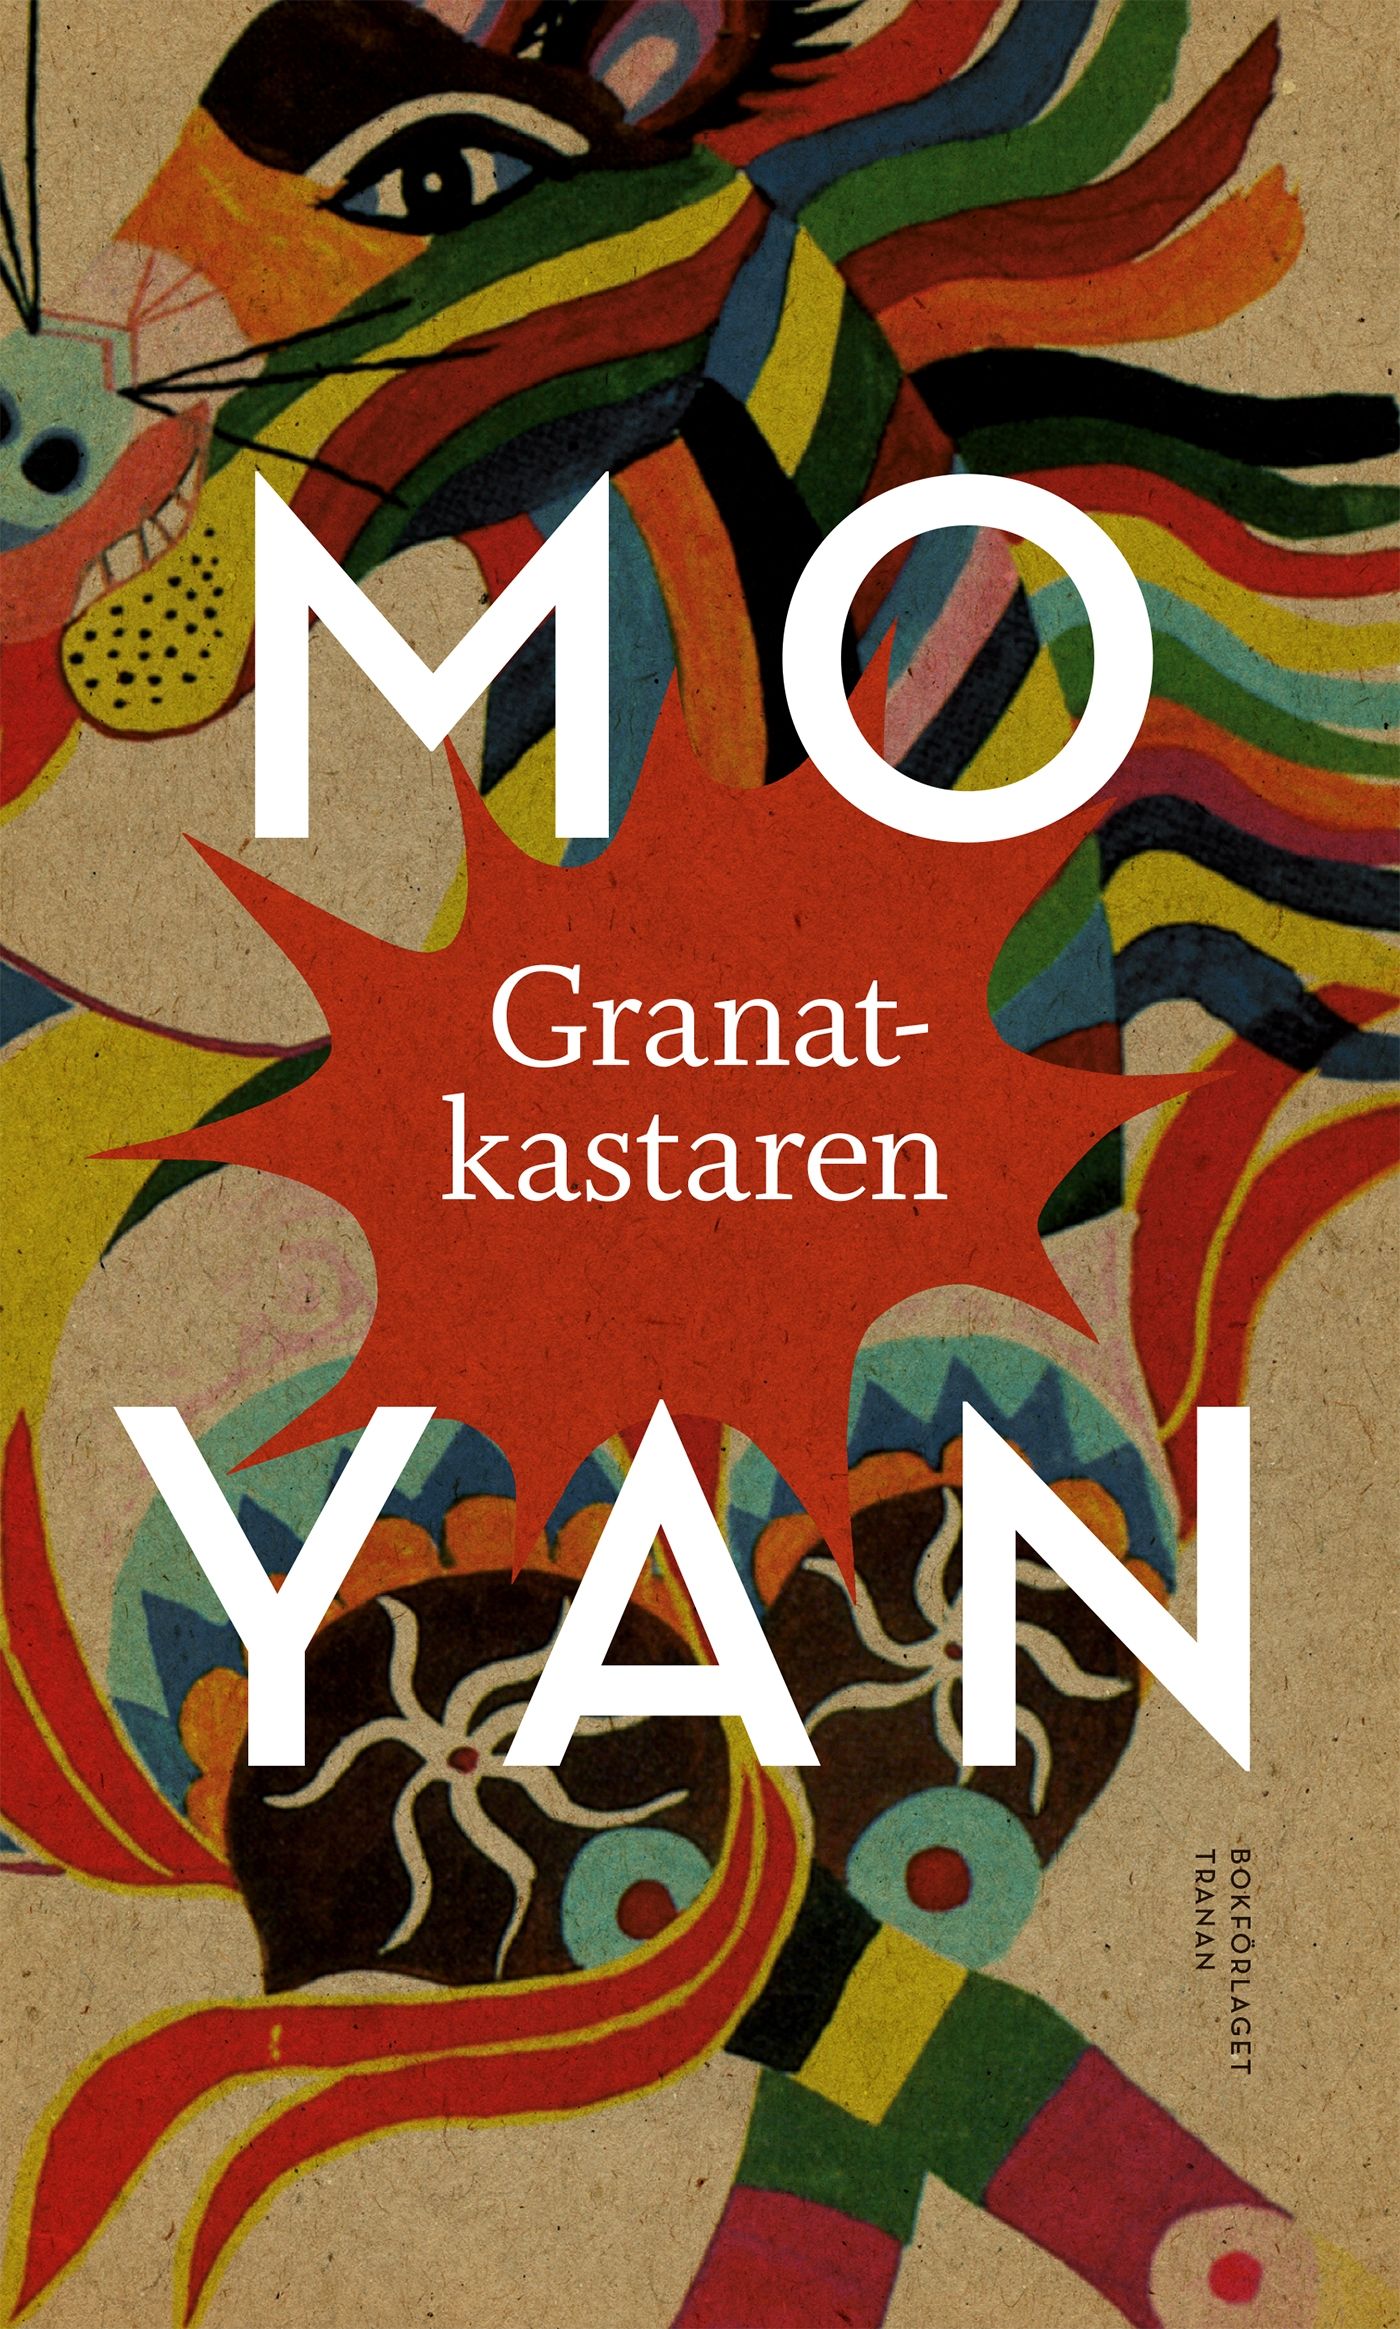 Granatkastaren, eBook by Mo Yan